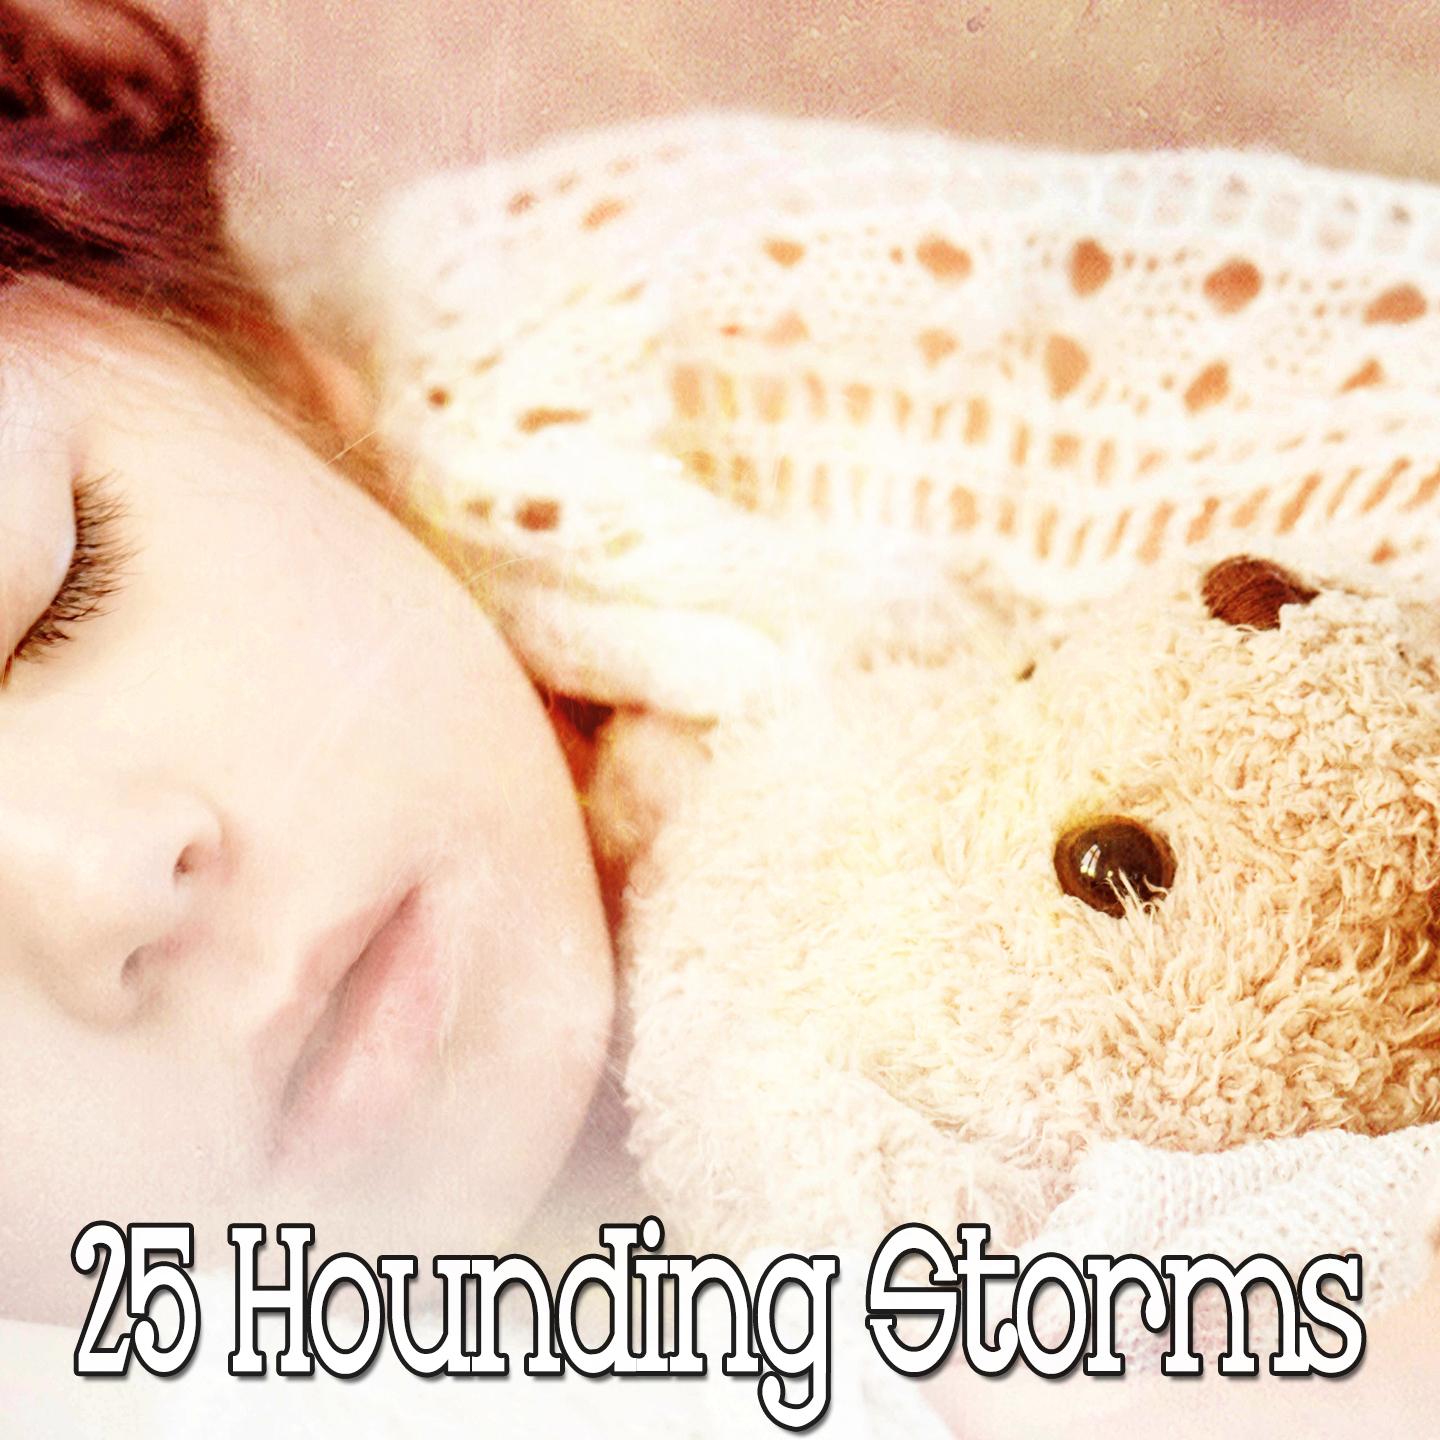 25 Hounding Storms